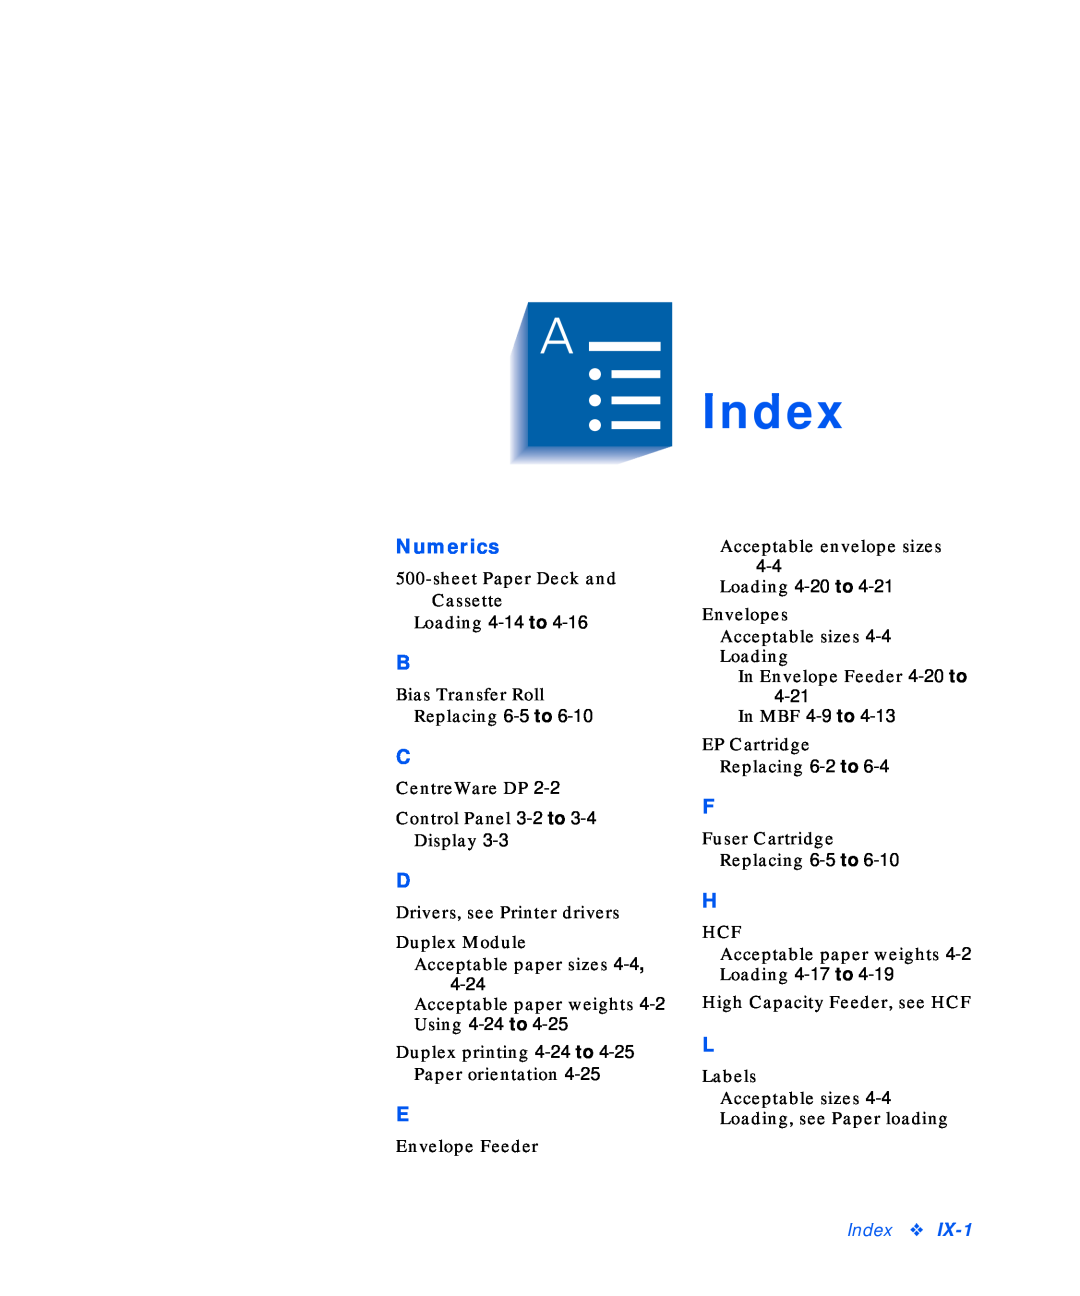 Xerox N17b manual Index, Numerics 